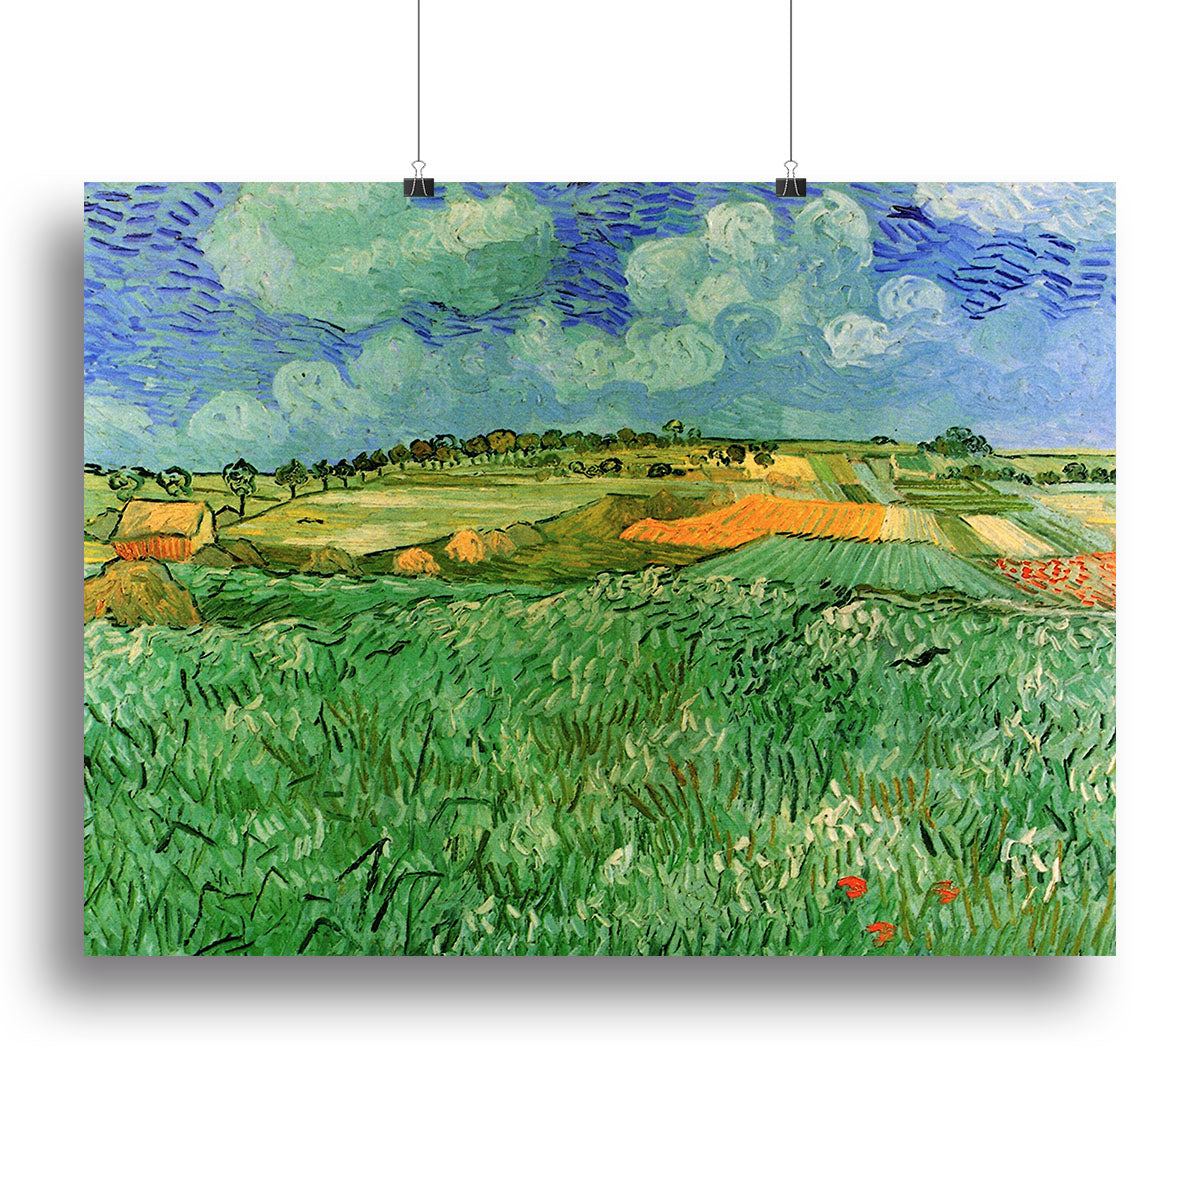 Plain Near Auvers by Van Gogh Canvas Print or Poster - Canvas Art Rocks - 2